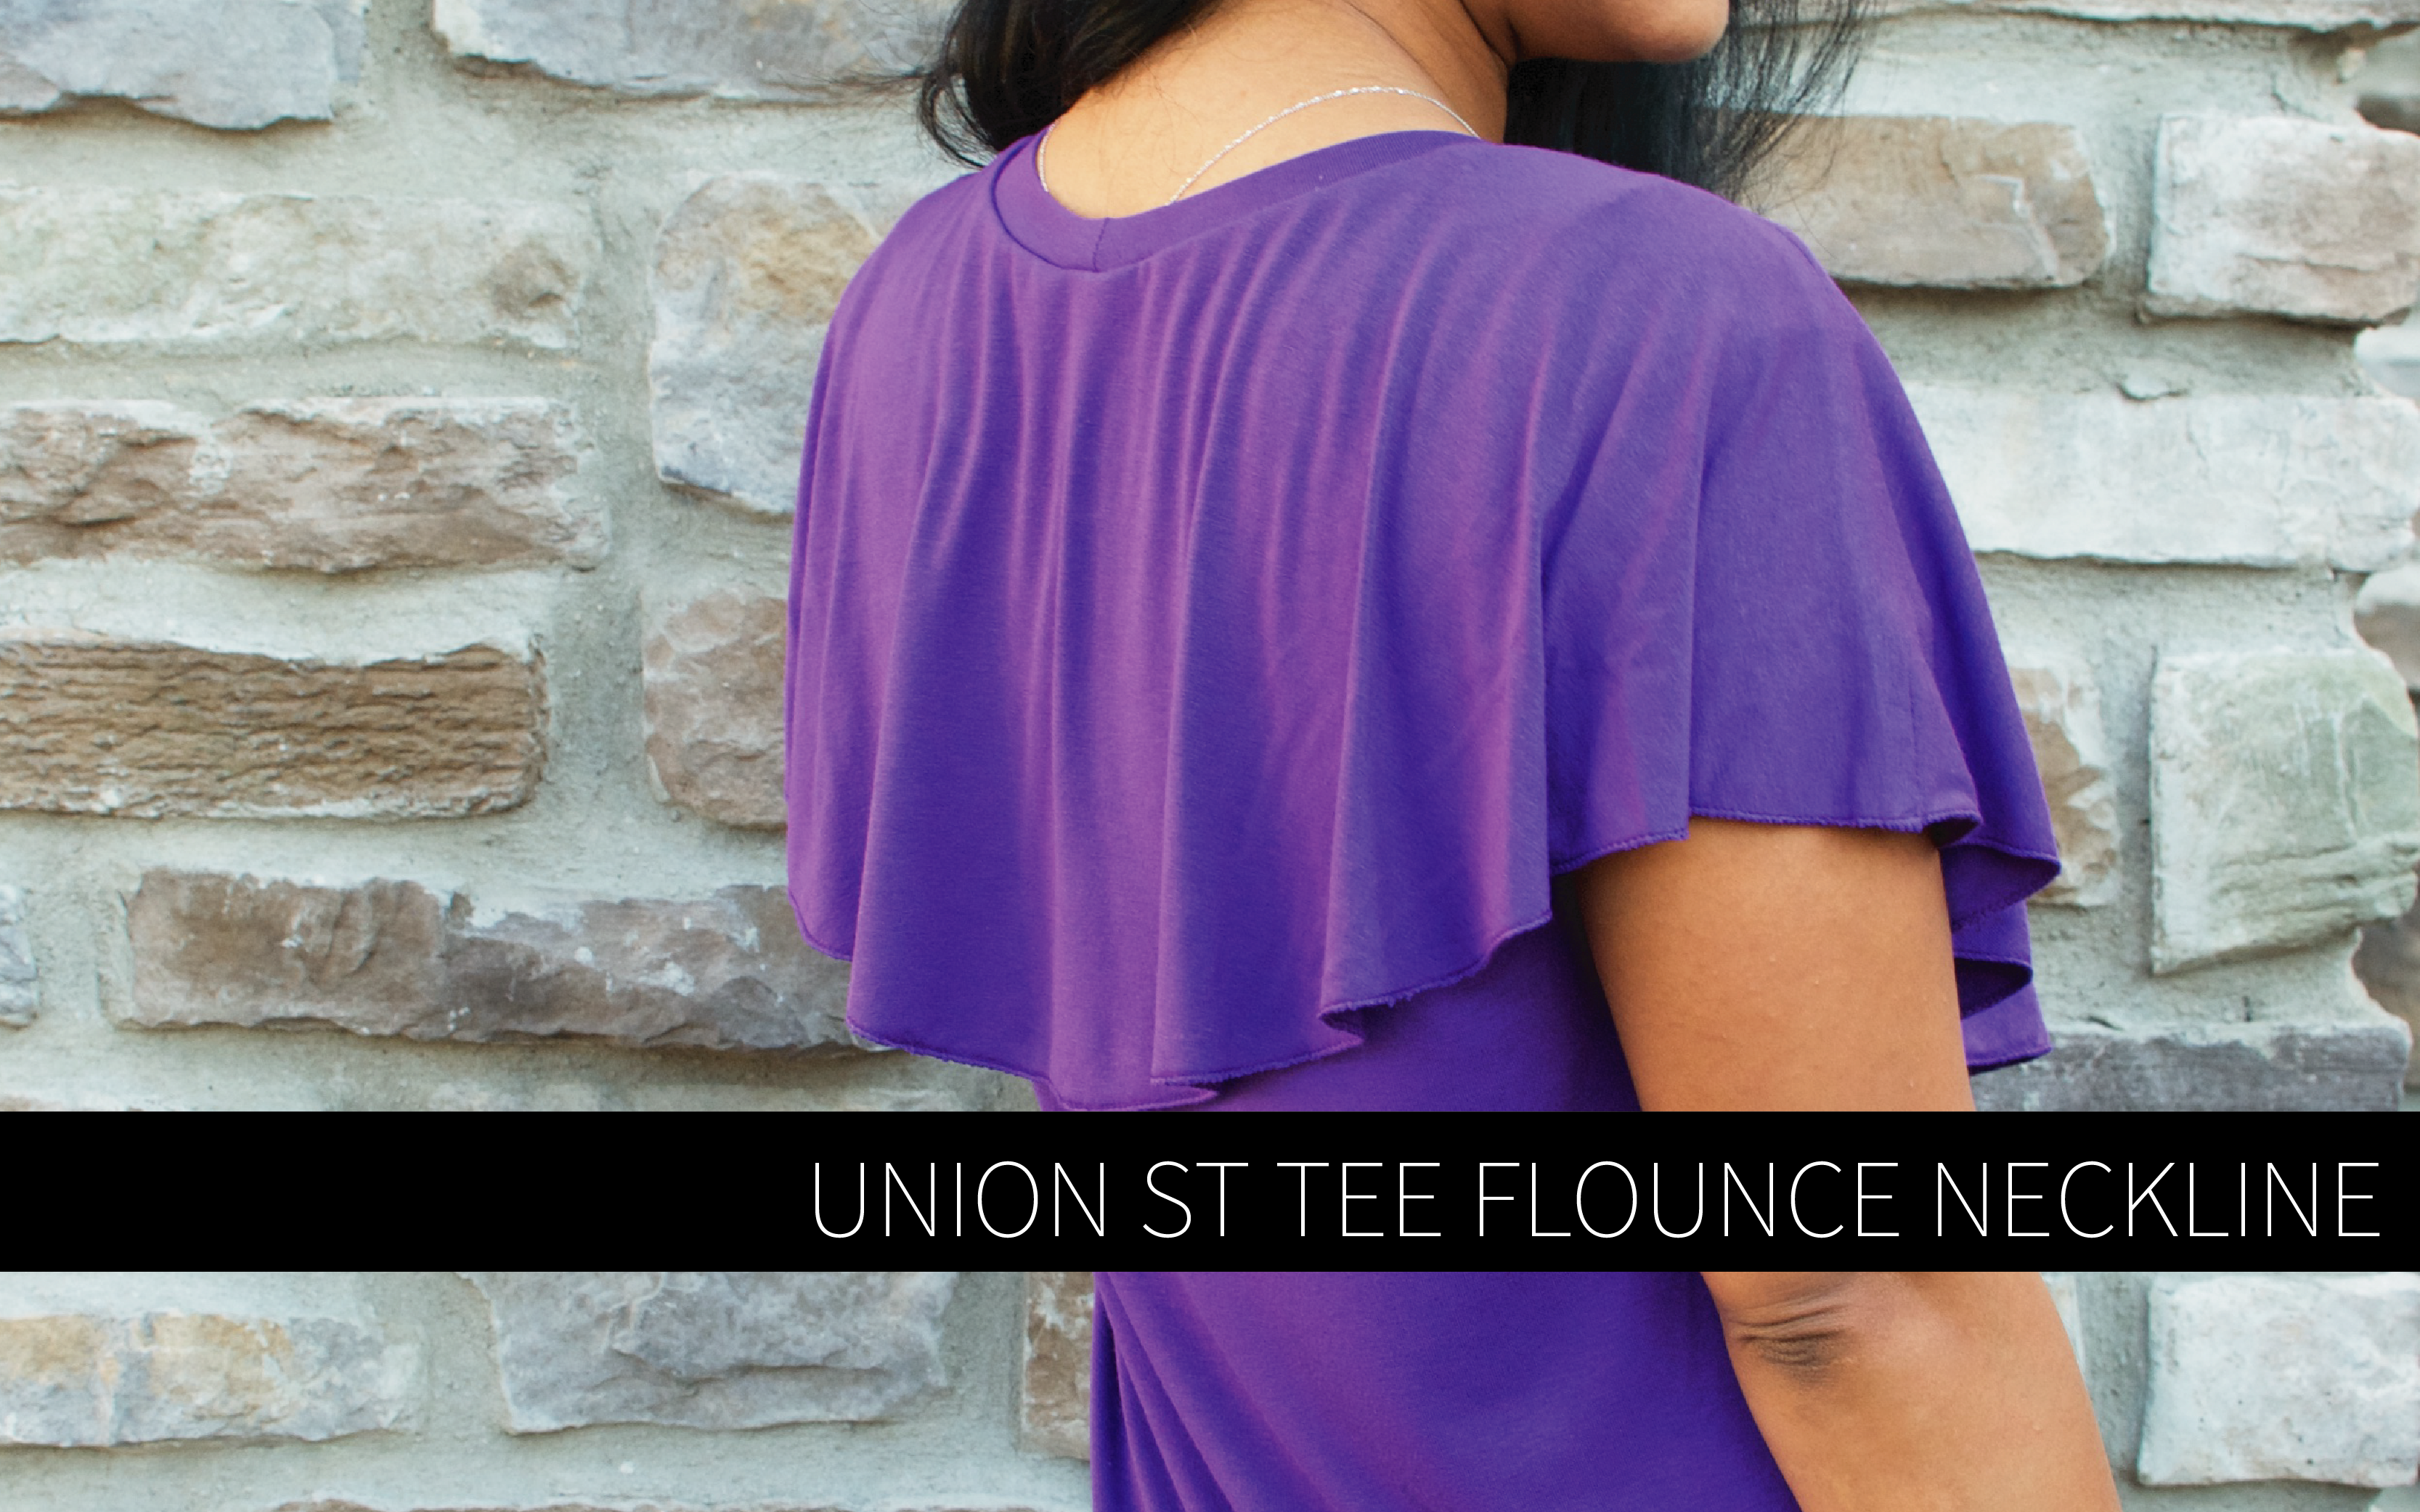 Union St Tee Flounce Neckline Tutorial - Hey June Handmade